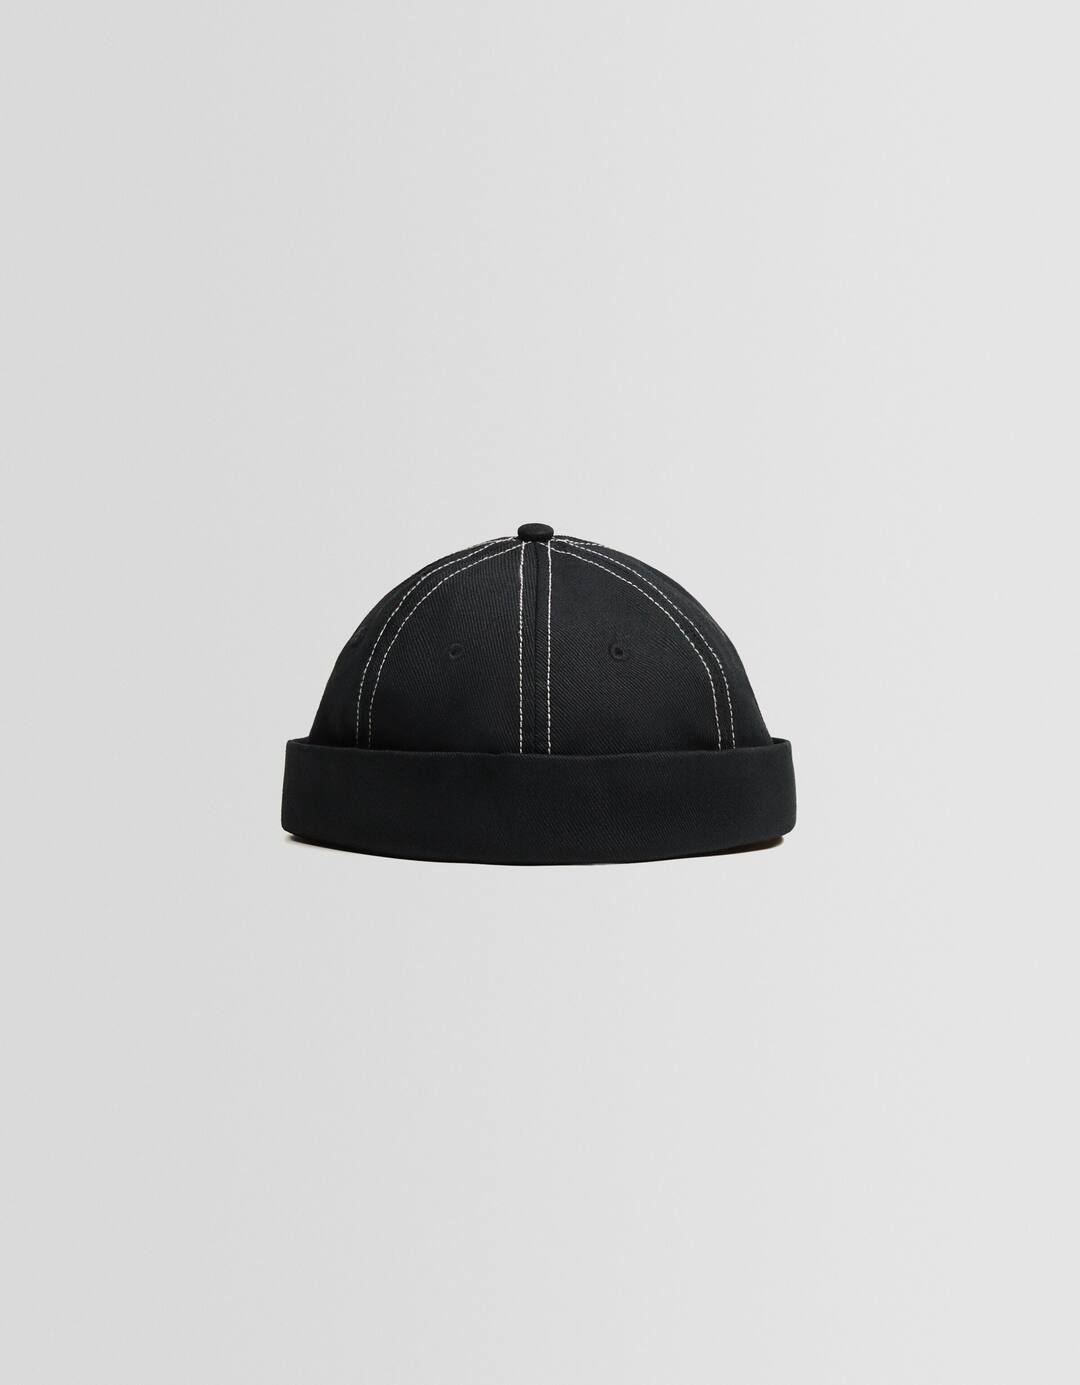 Docker hat with contrast thread